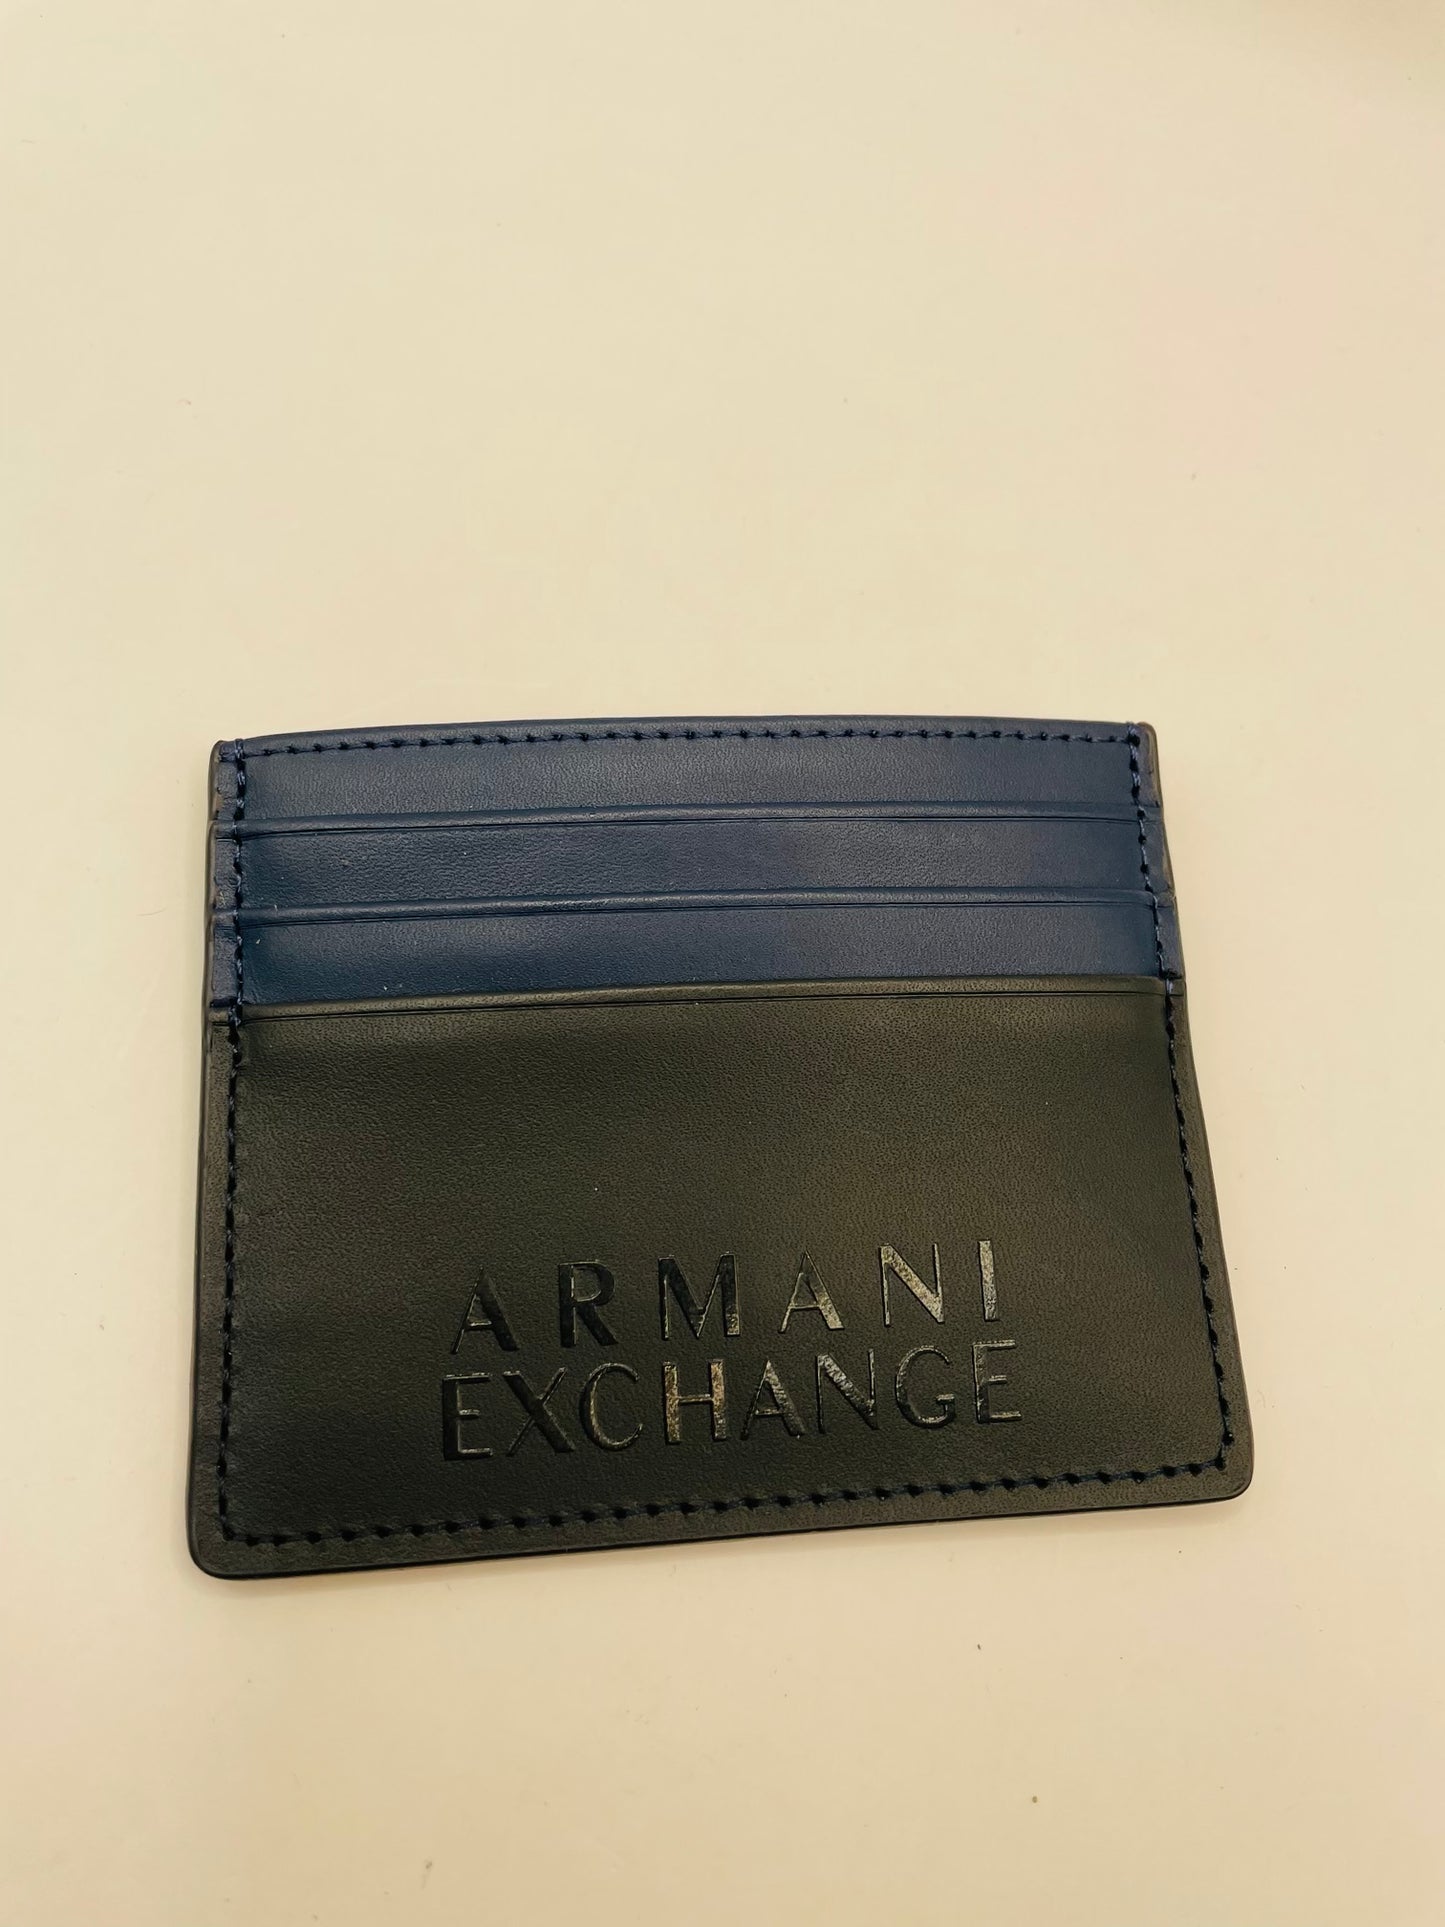 Armani exchange card holder